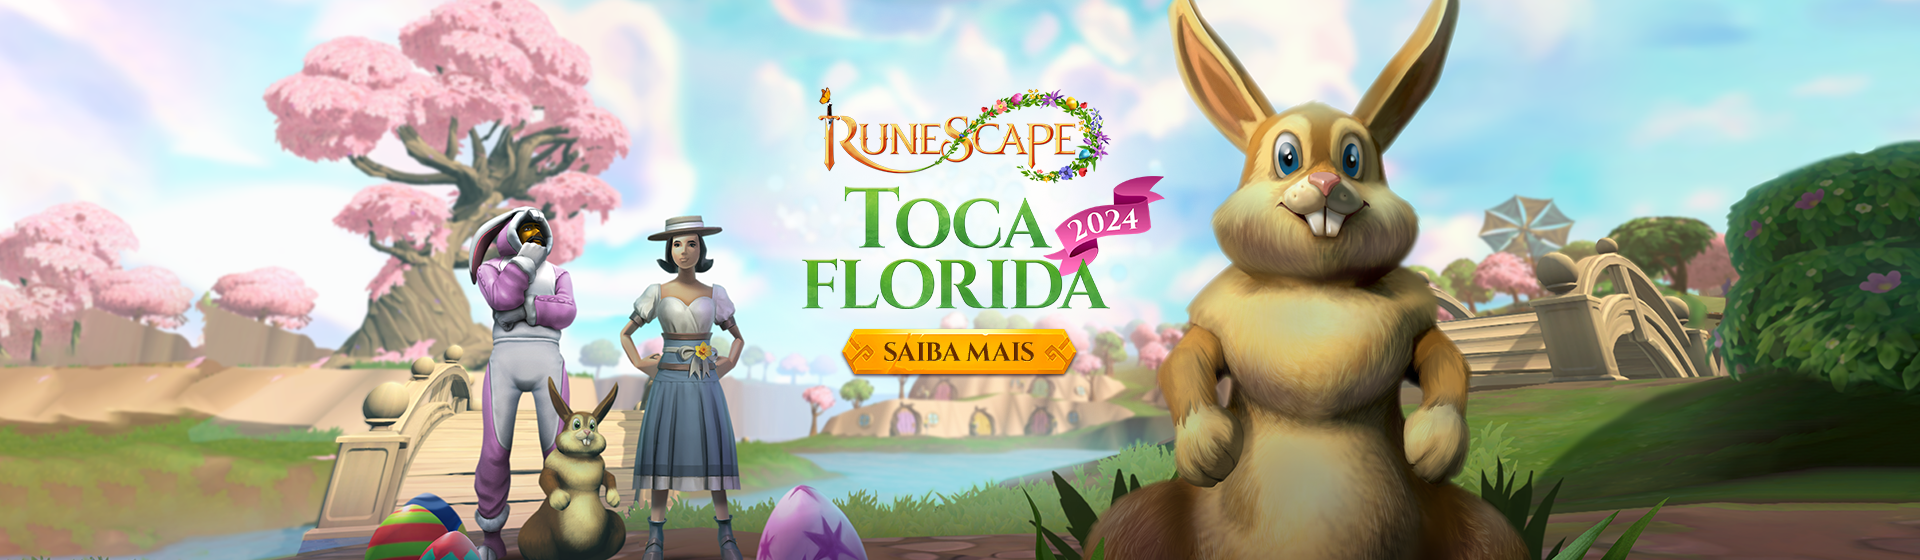 RuneScape - Toca Florida